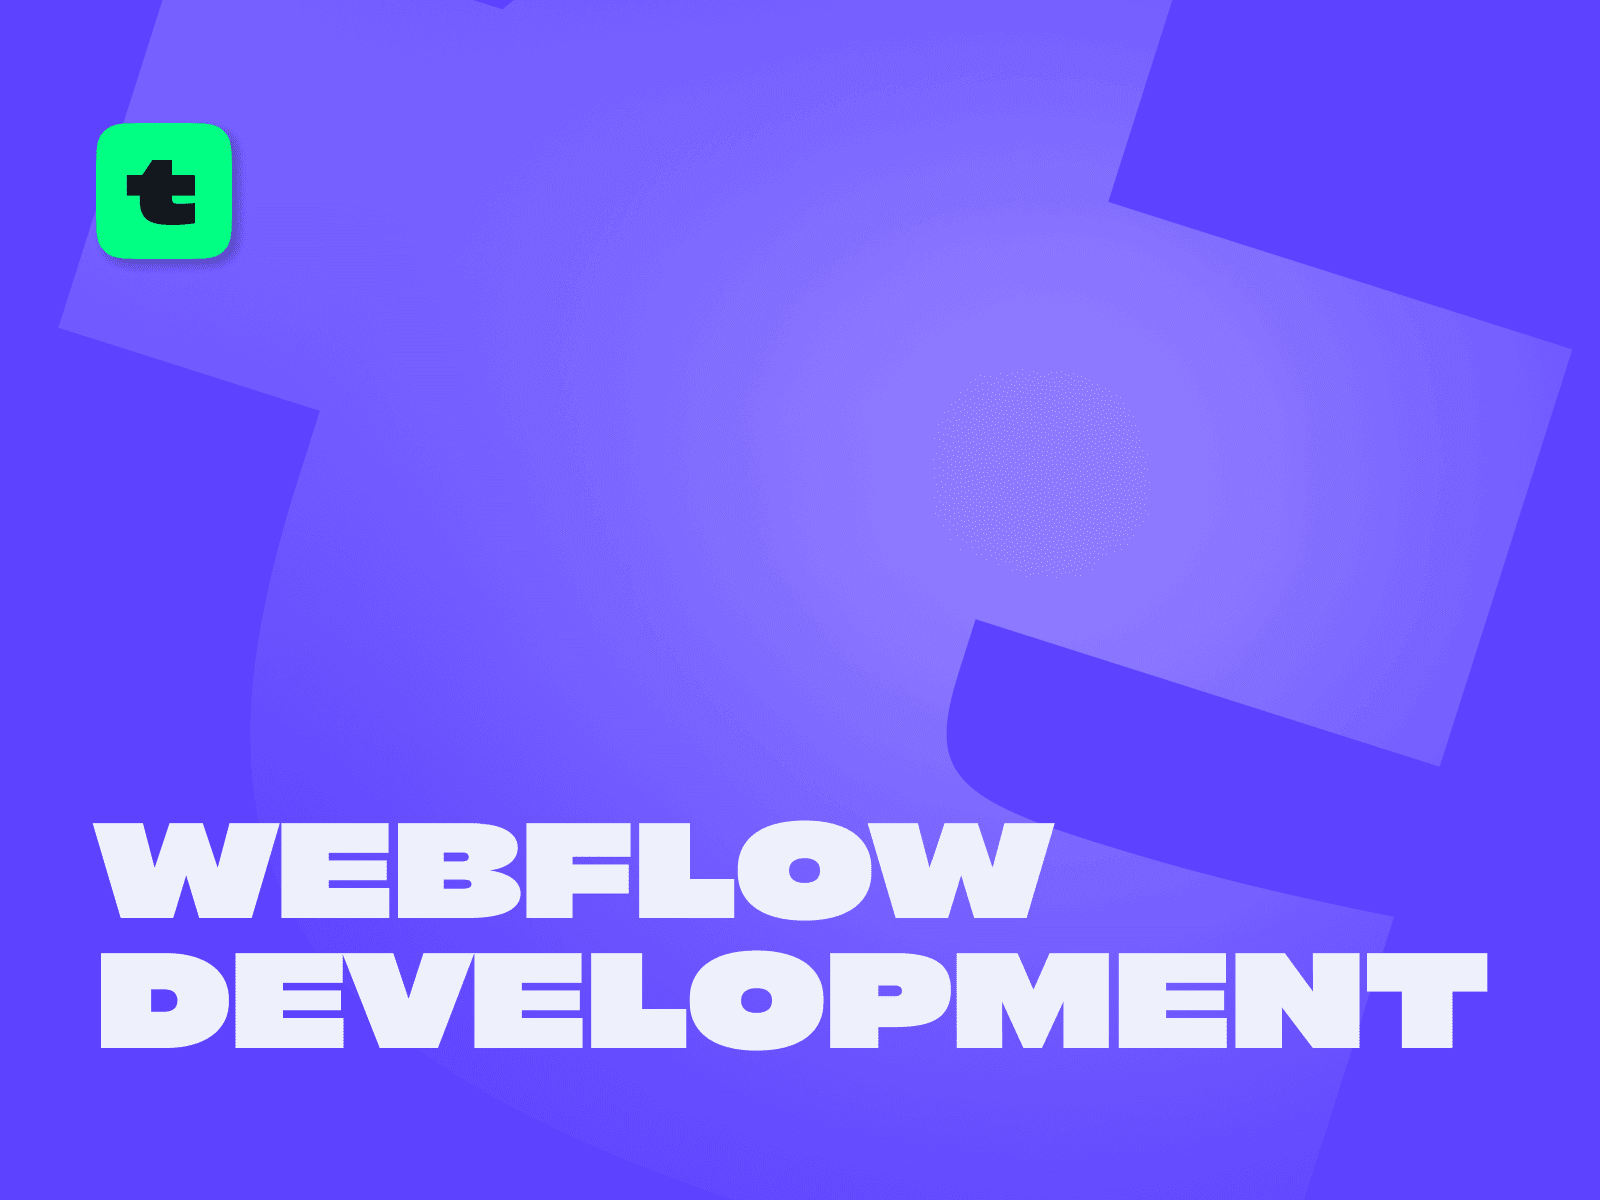 Webflow Consultation & Development, a service by Rajan Dave